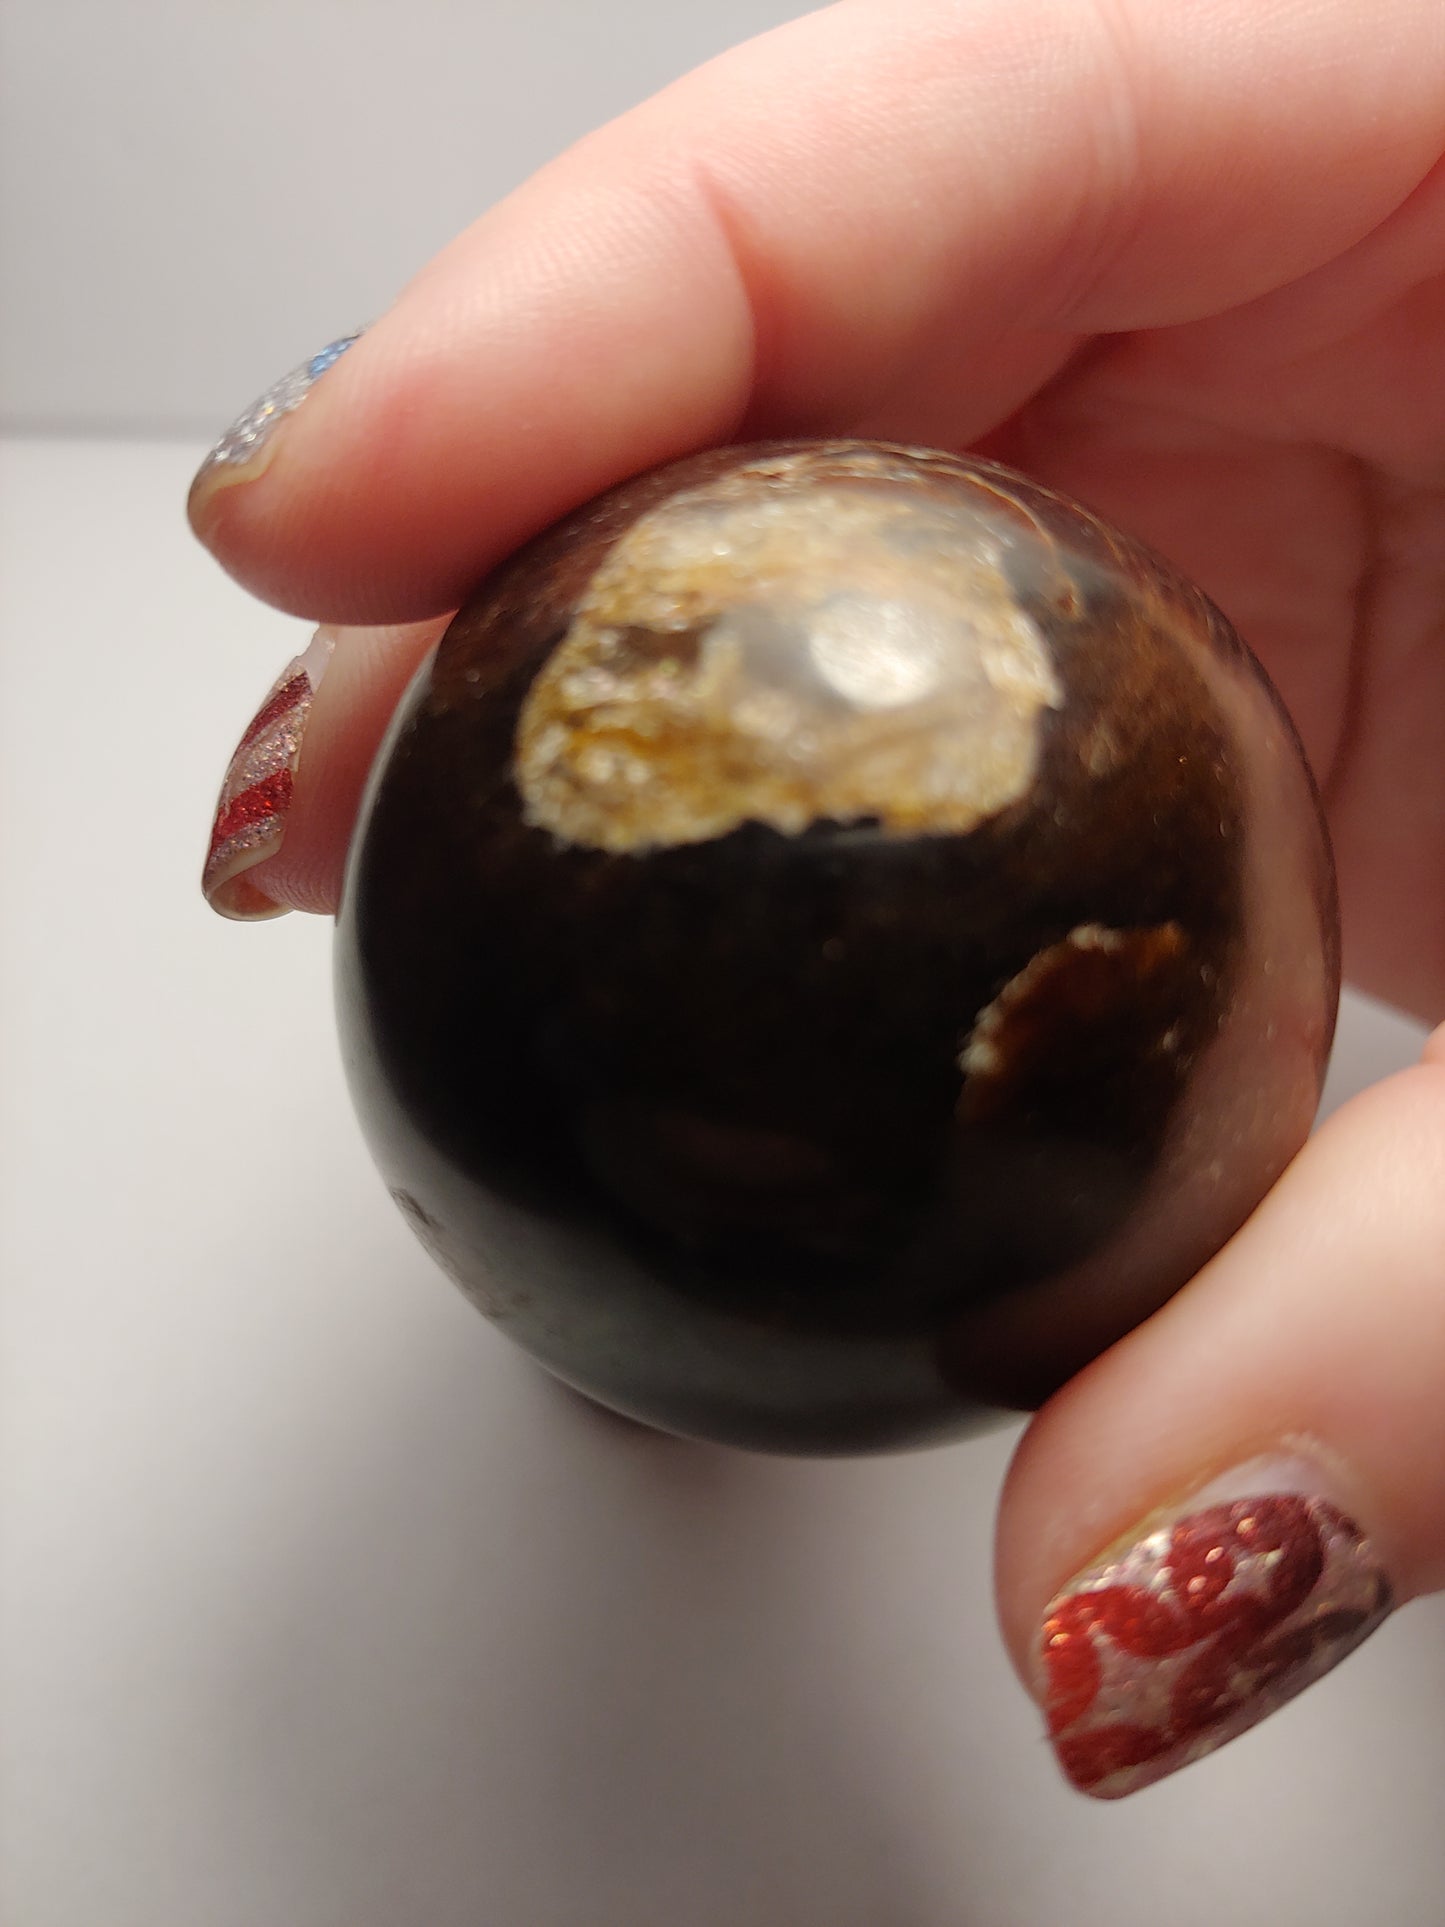 Garnet Sphere